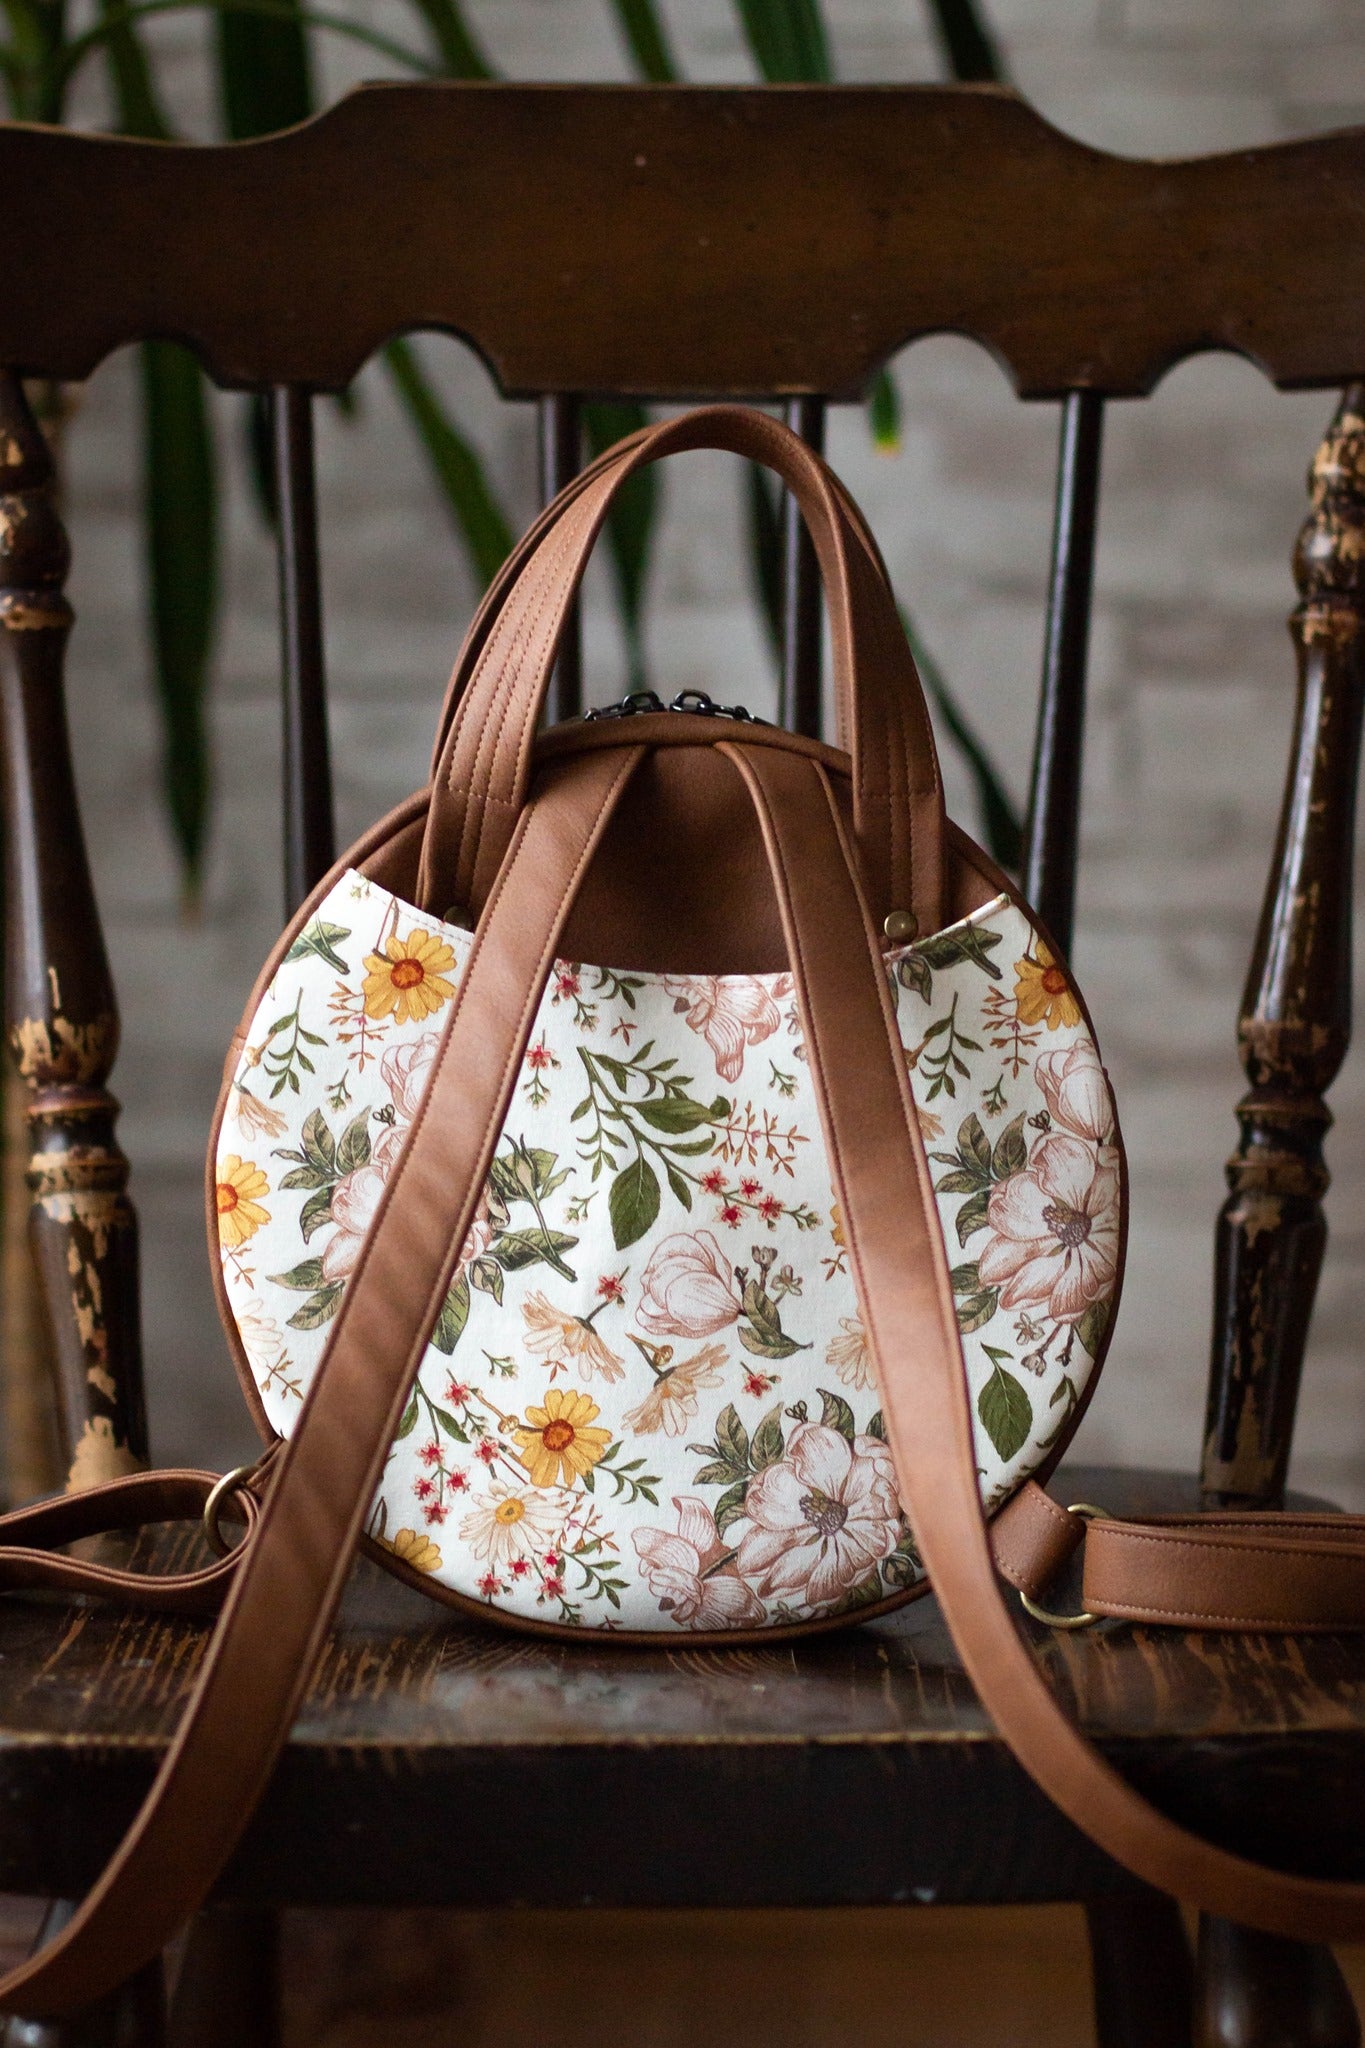 Louis Vuitton Bucket Bag Brown - $127 - From Emma